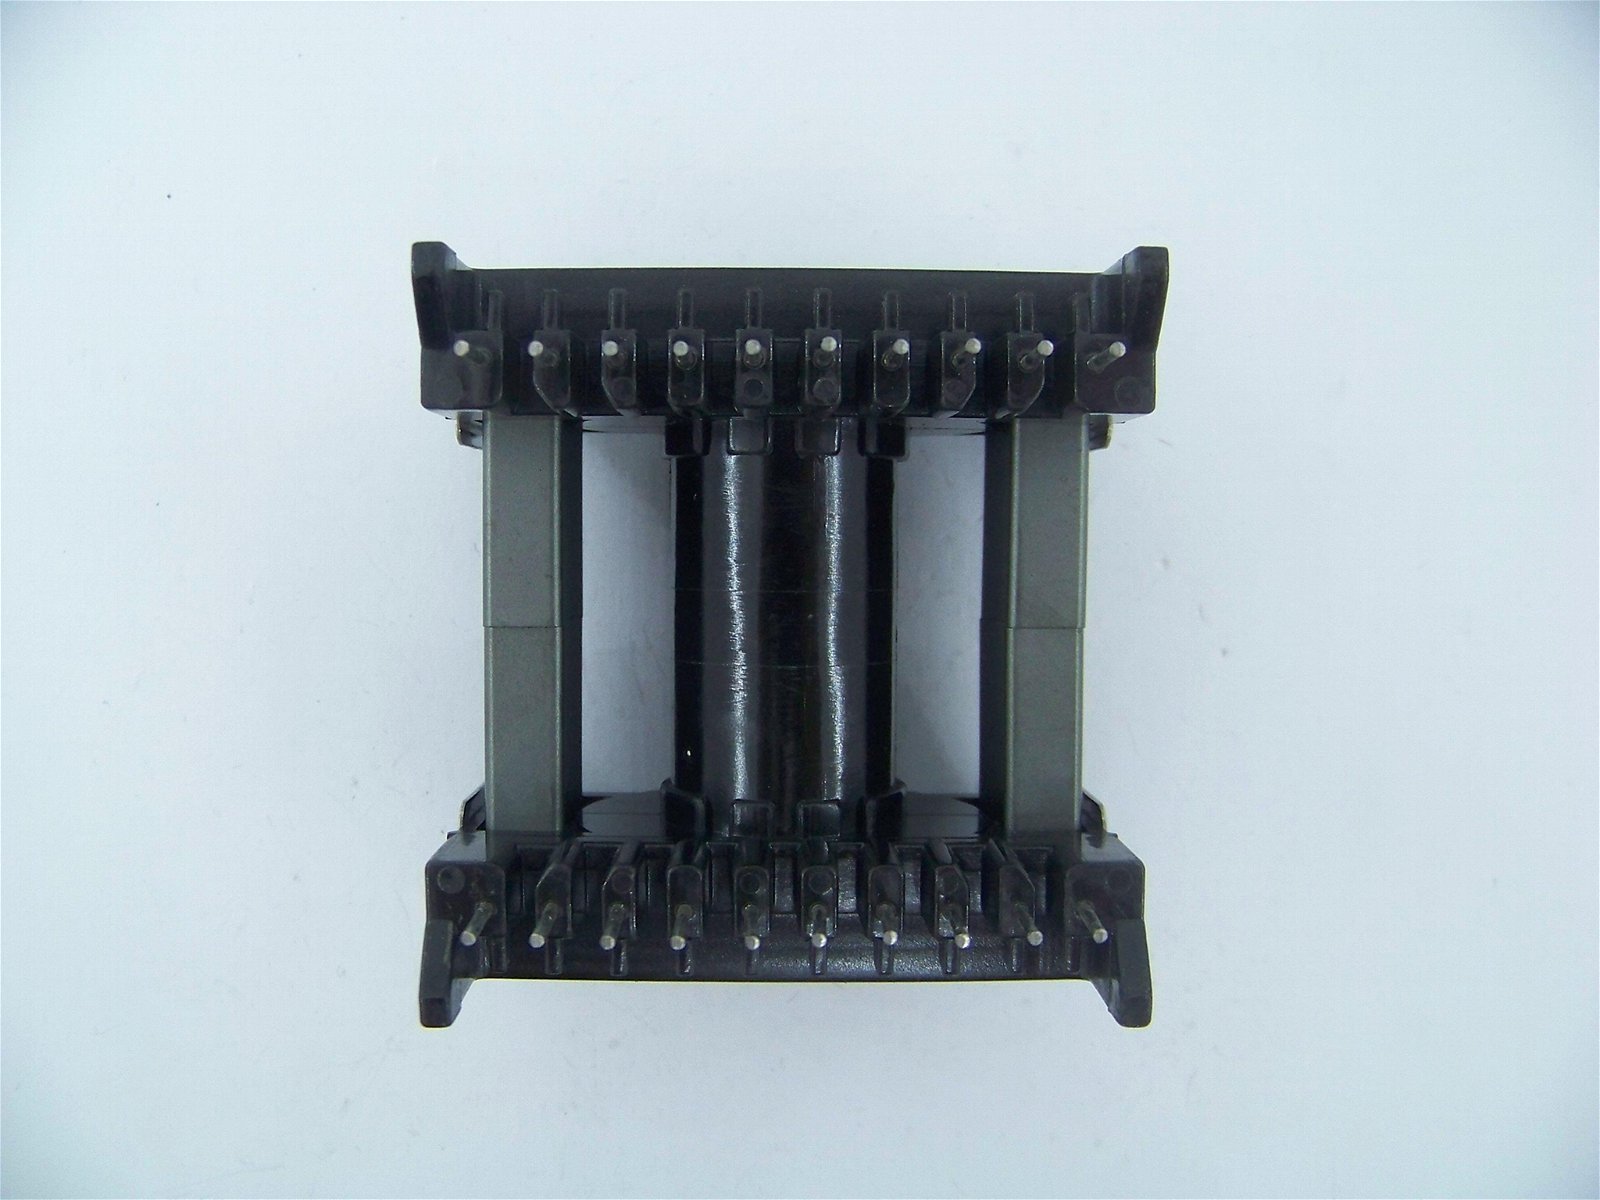 ETD49 horizontal 10+10 pintransformer bobbin   PC40 ferrite core  5